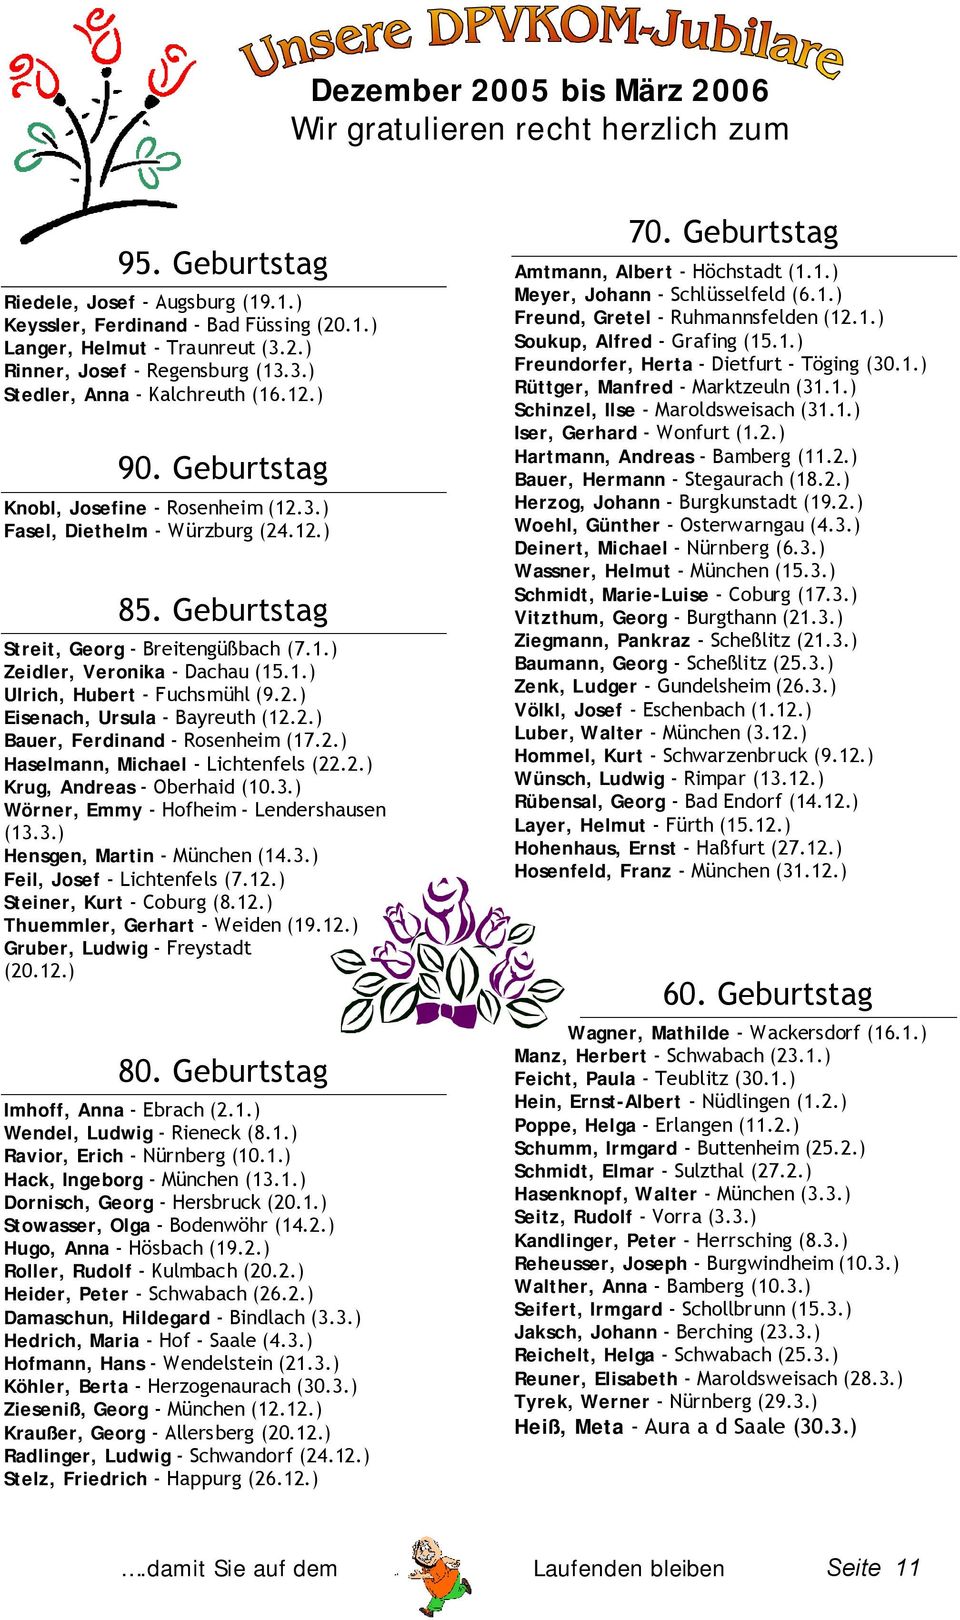 1.) Ulrich, Hubert - Fuchsmühl (9.2.) Eisenach, Ursula - Bayreuth (12.2.) Bauer, Ferdinand - Rosenheim (17.2.) Haselmann, Michael - Lichtenfels (22.2.) Krug, Andreas - Oberhaid (10.3.